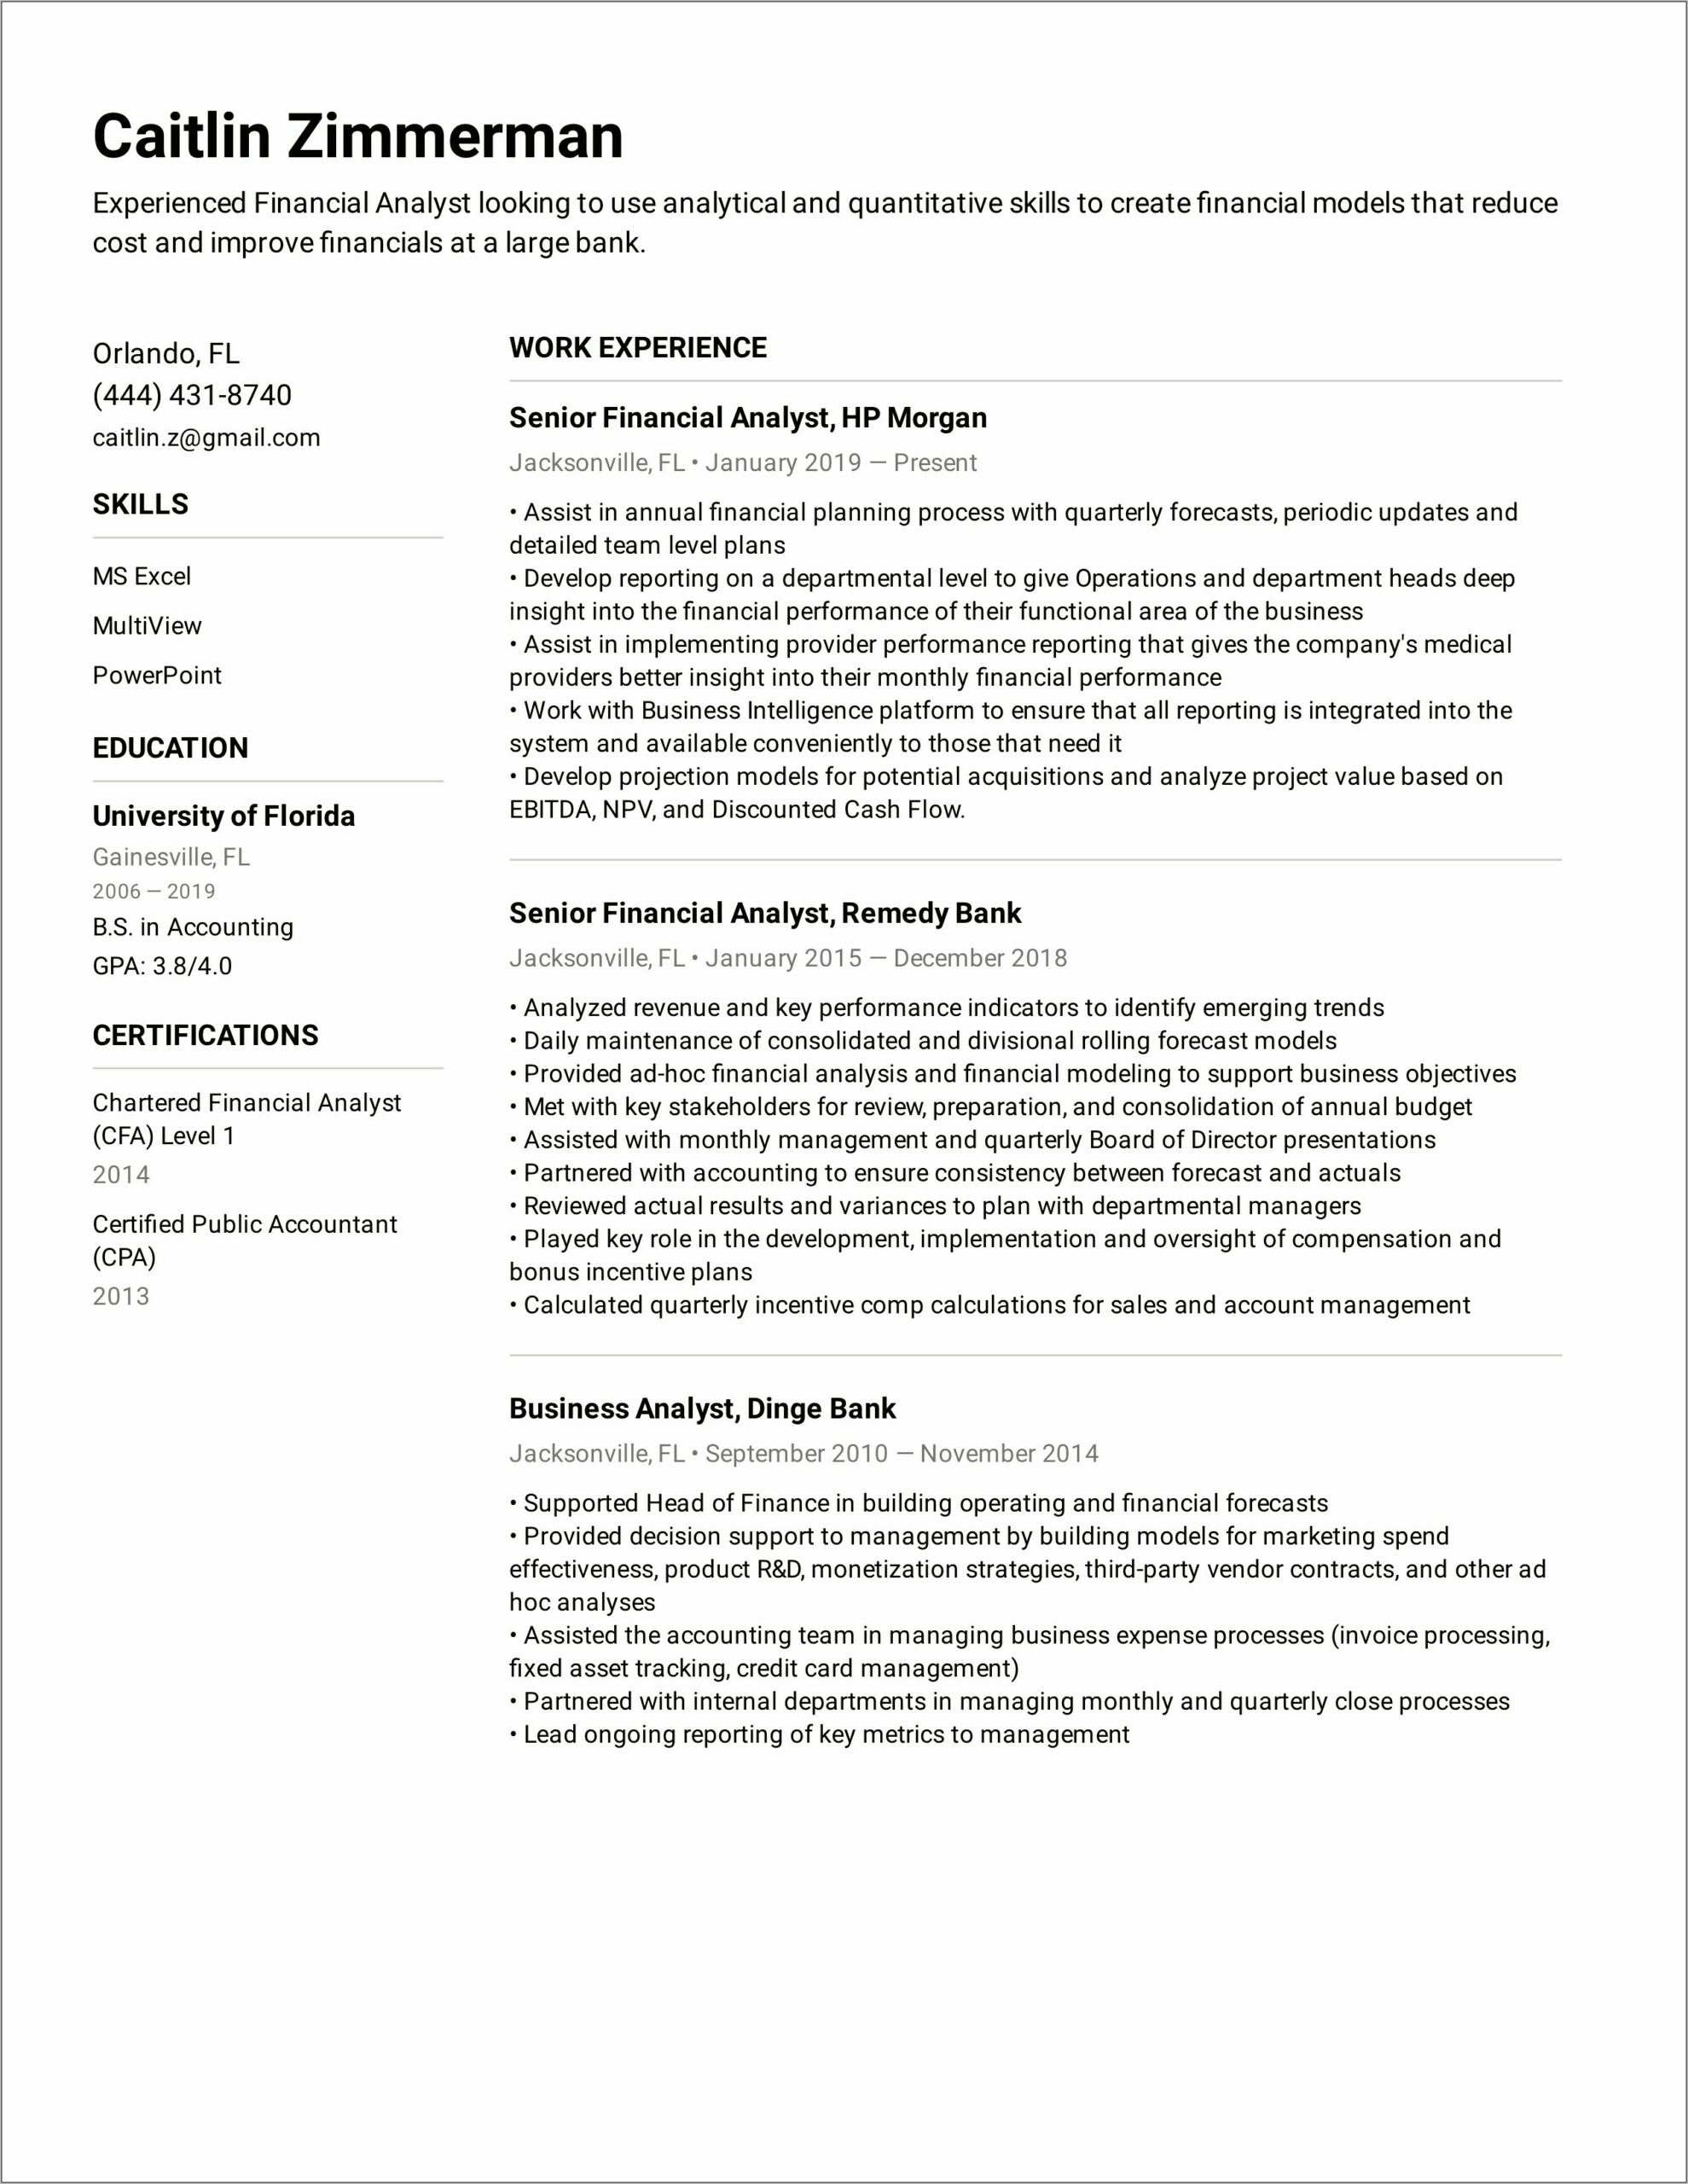 Specialist Job Description For Resume